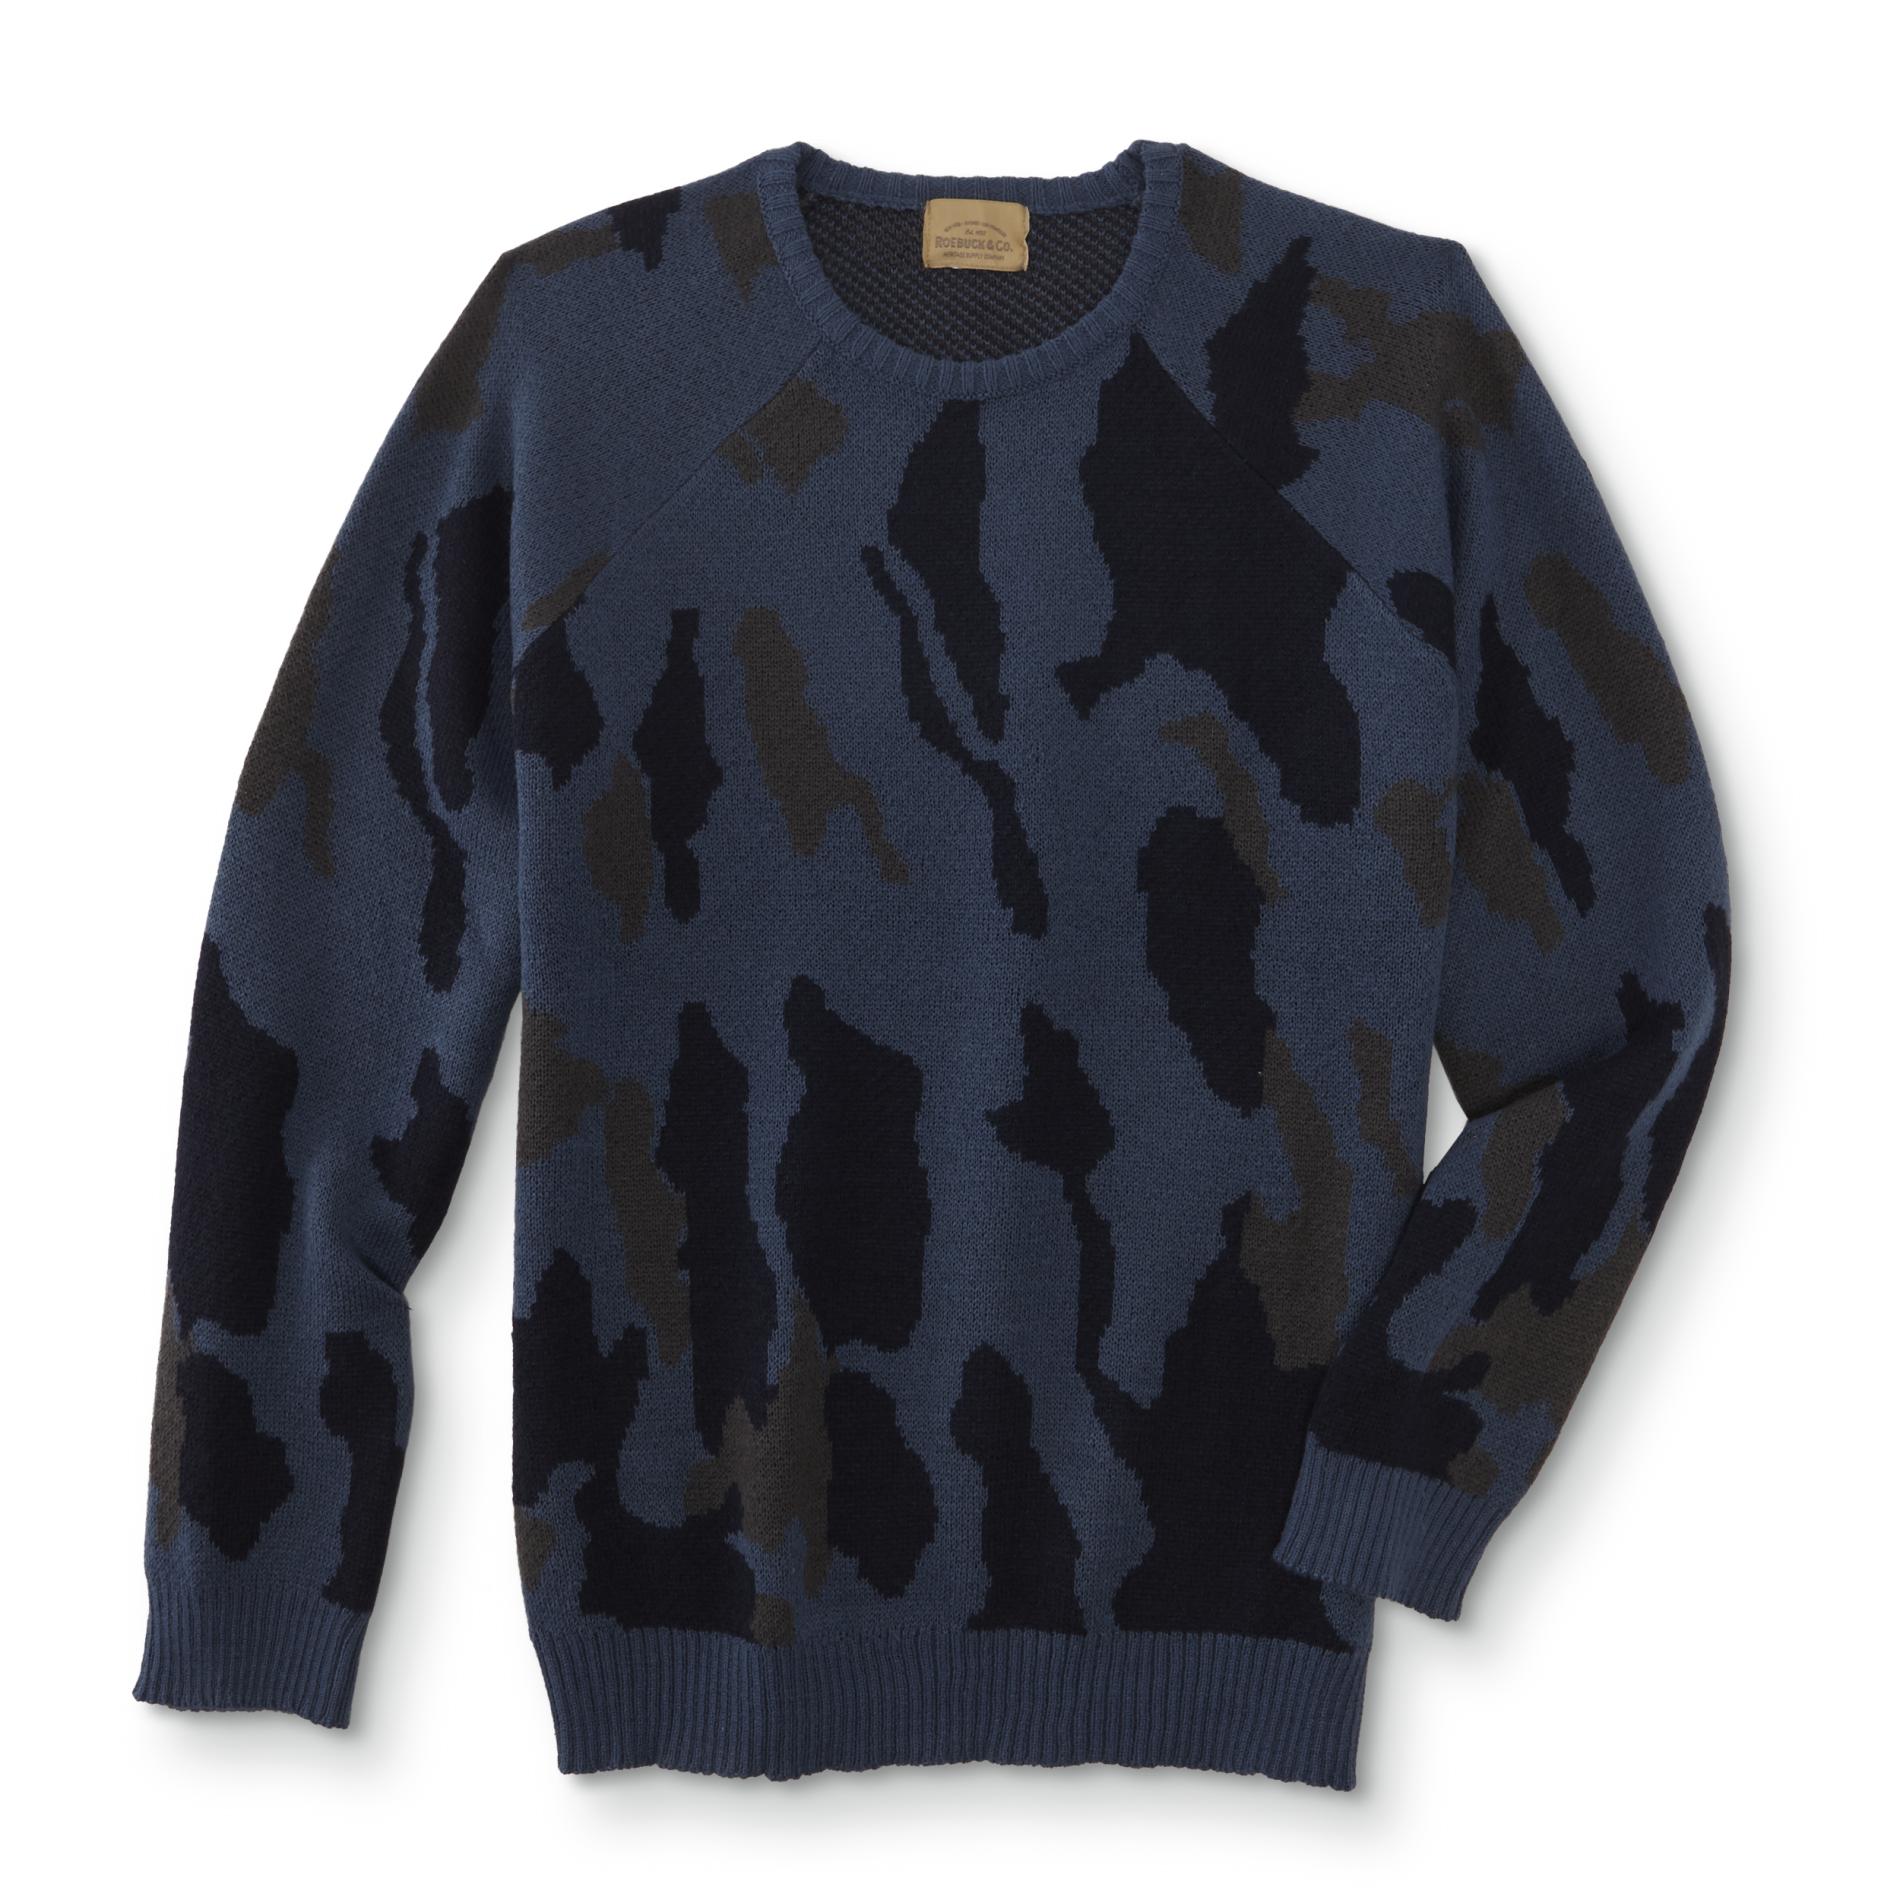 Roebucks Young Men's Sweater - Camouflage